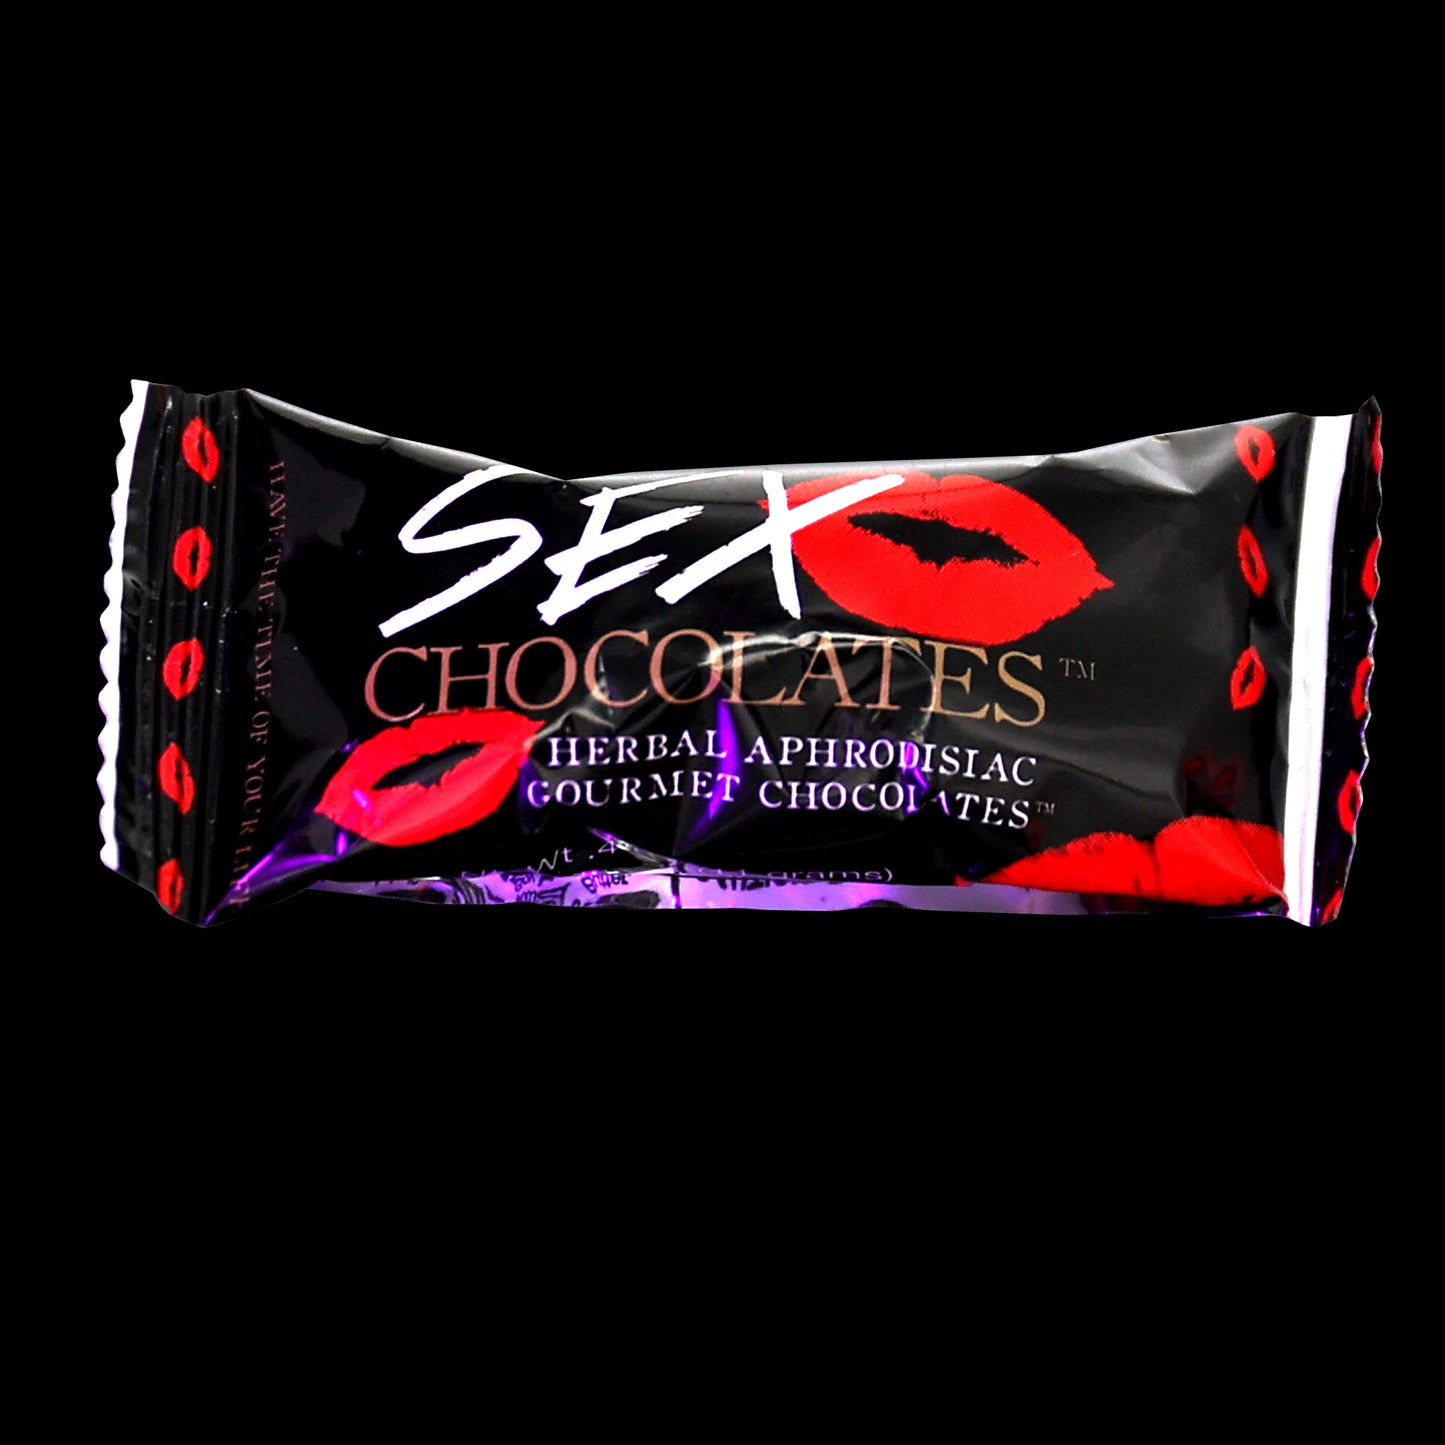 SEX CHOCOLATES